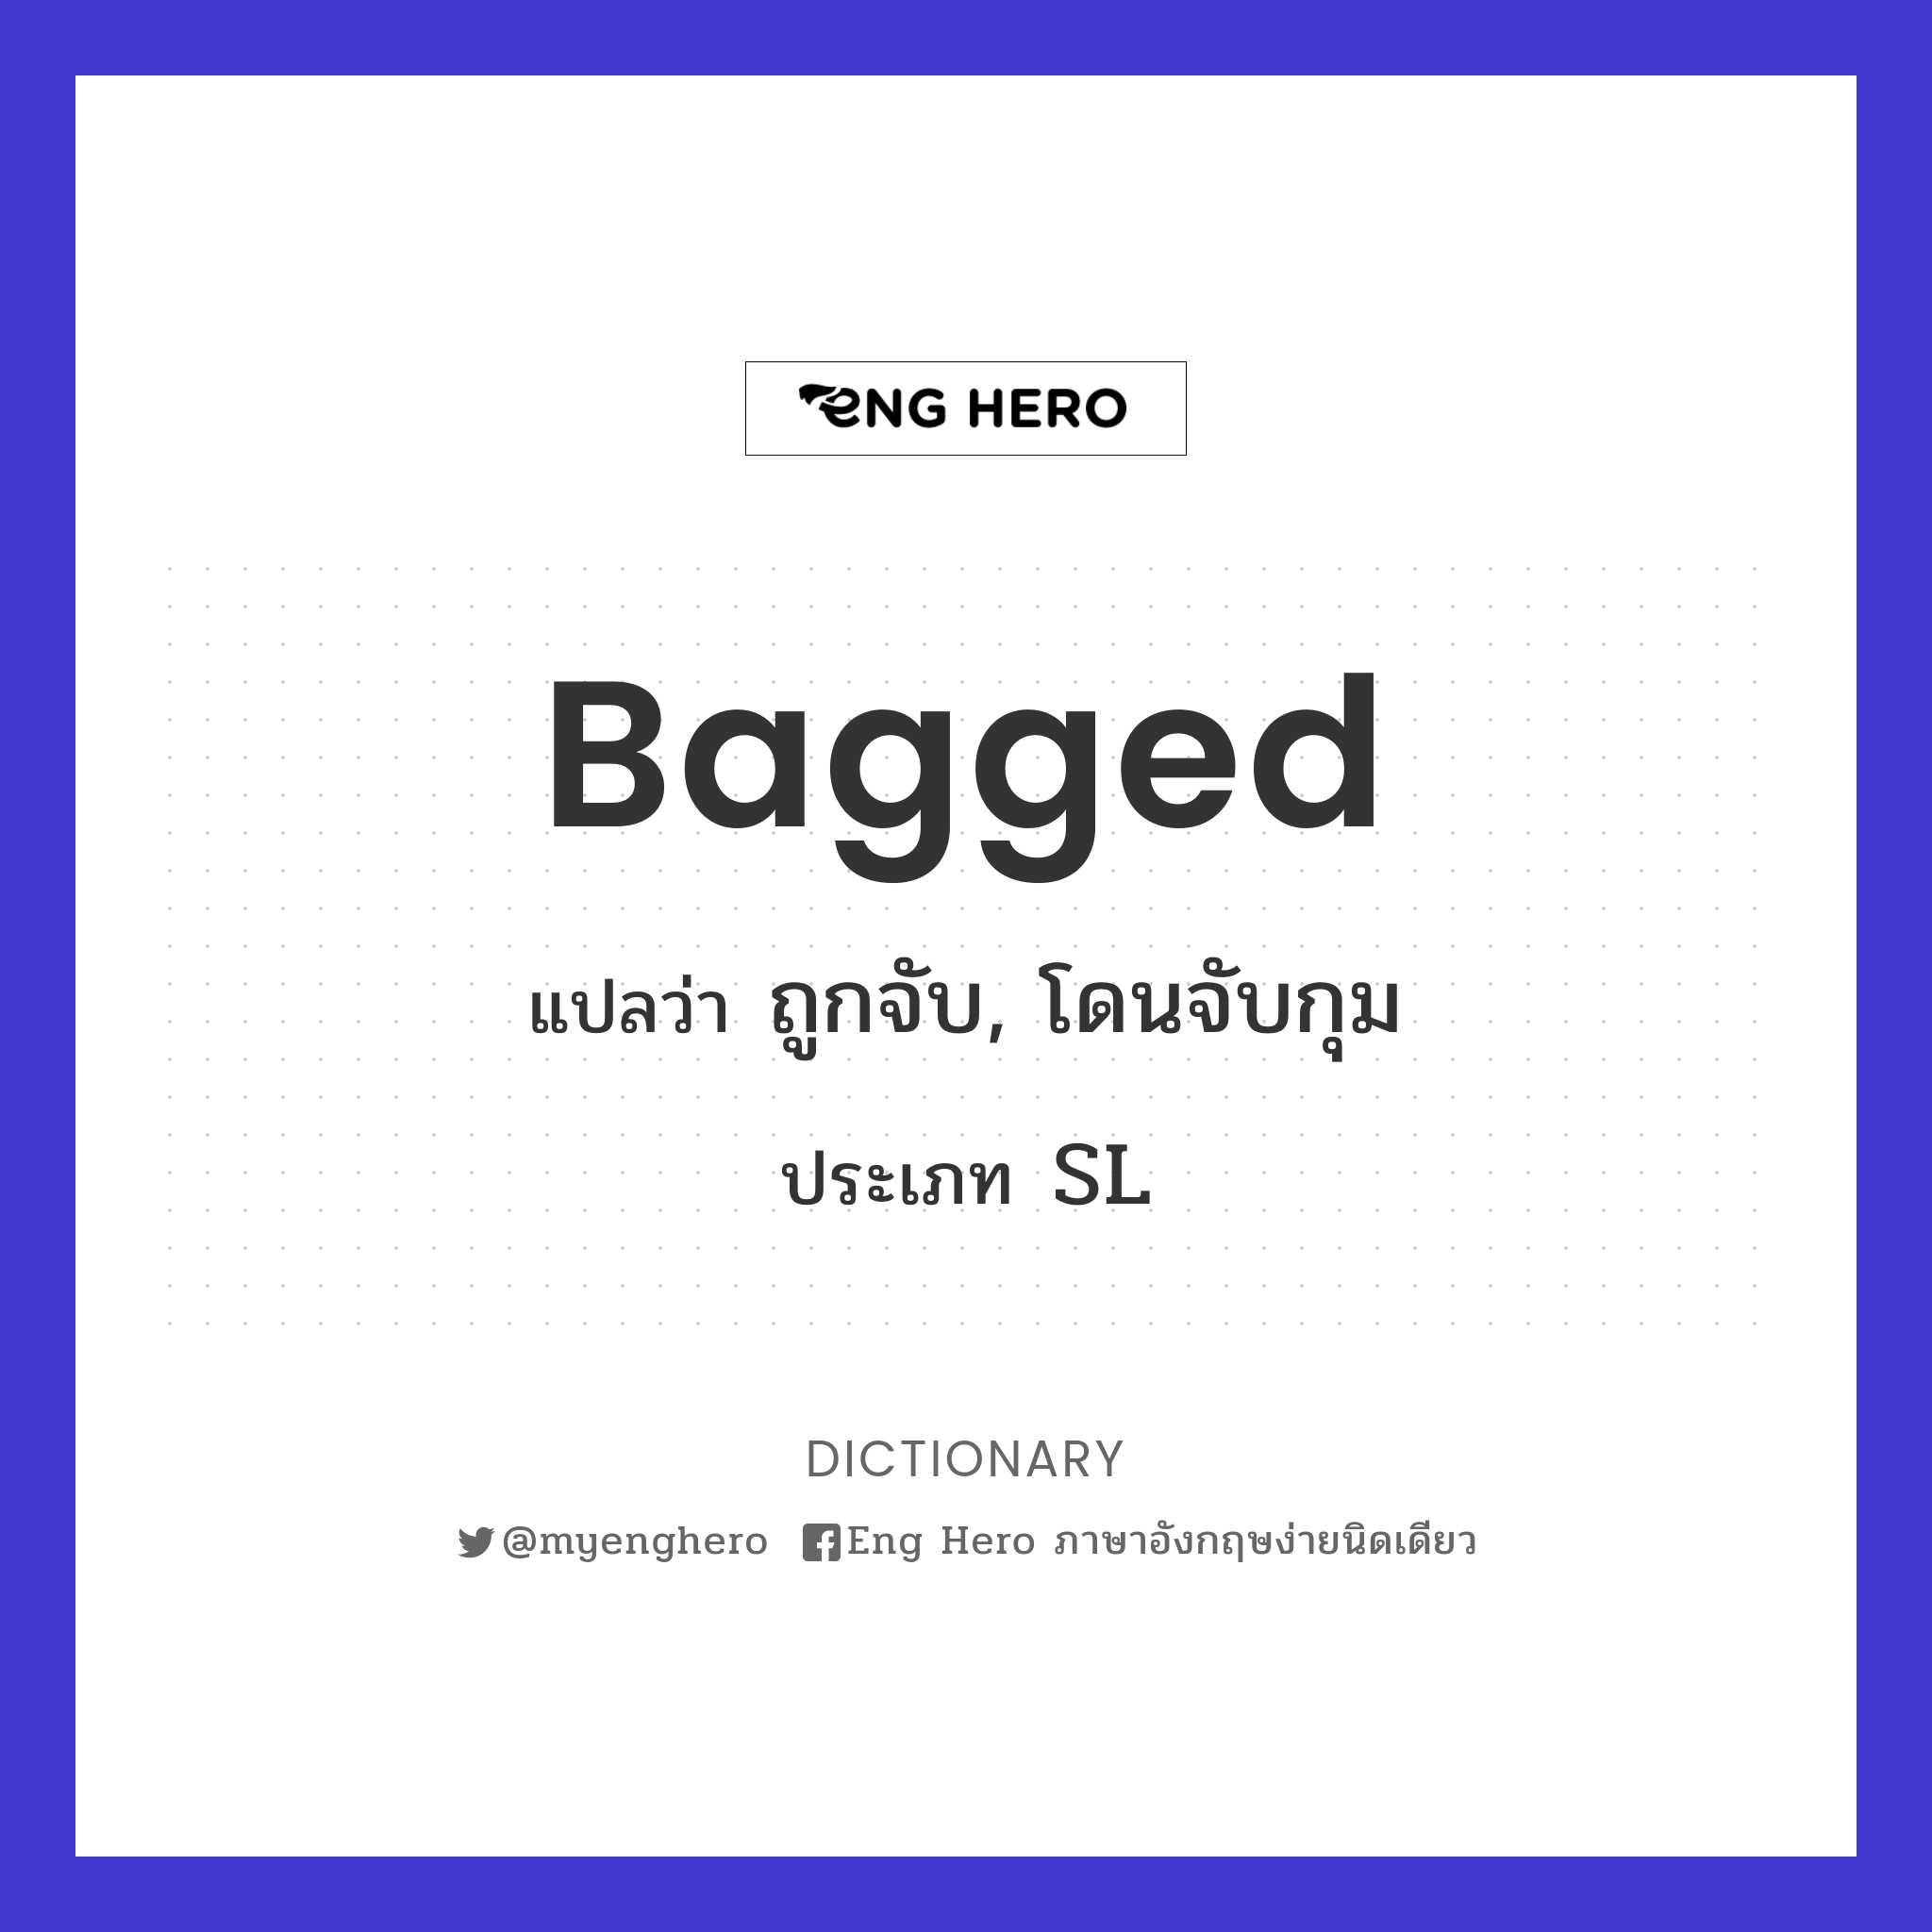 bagged